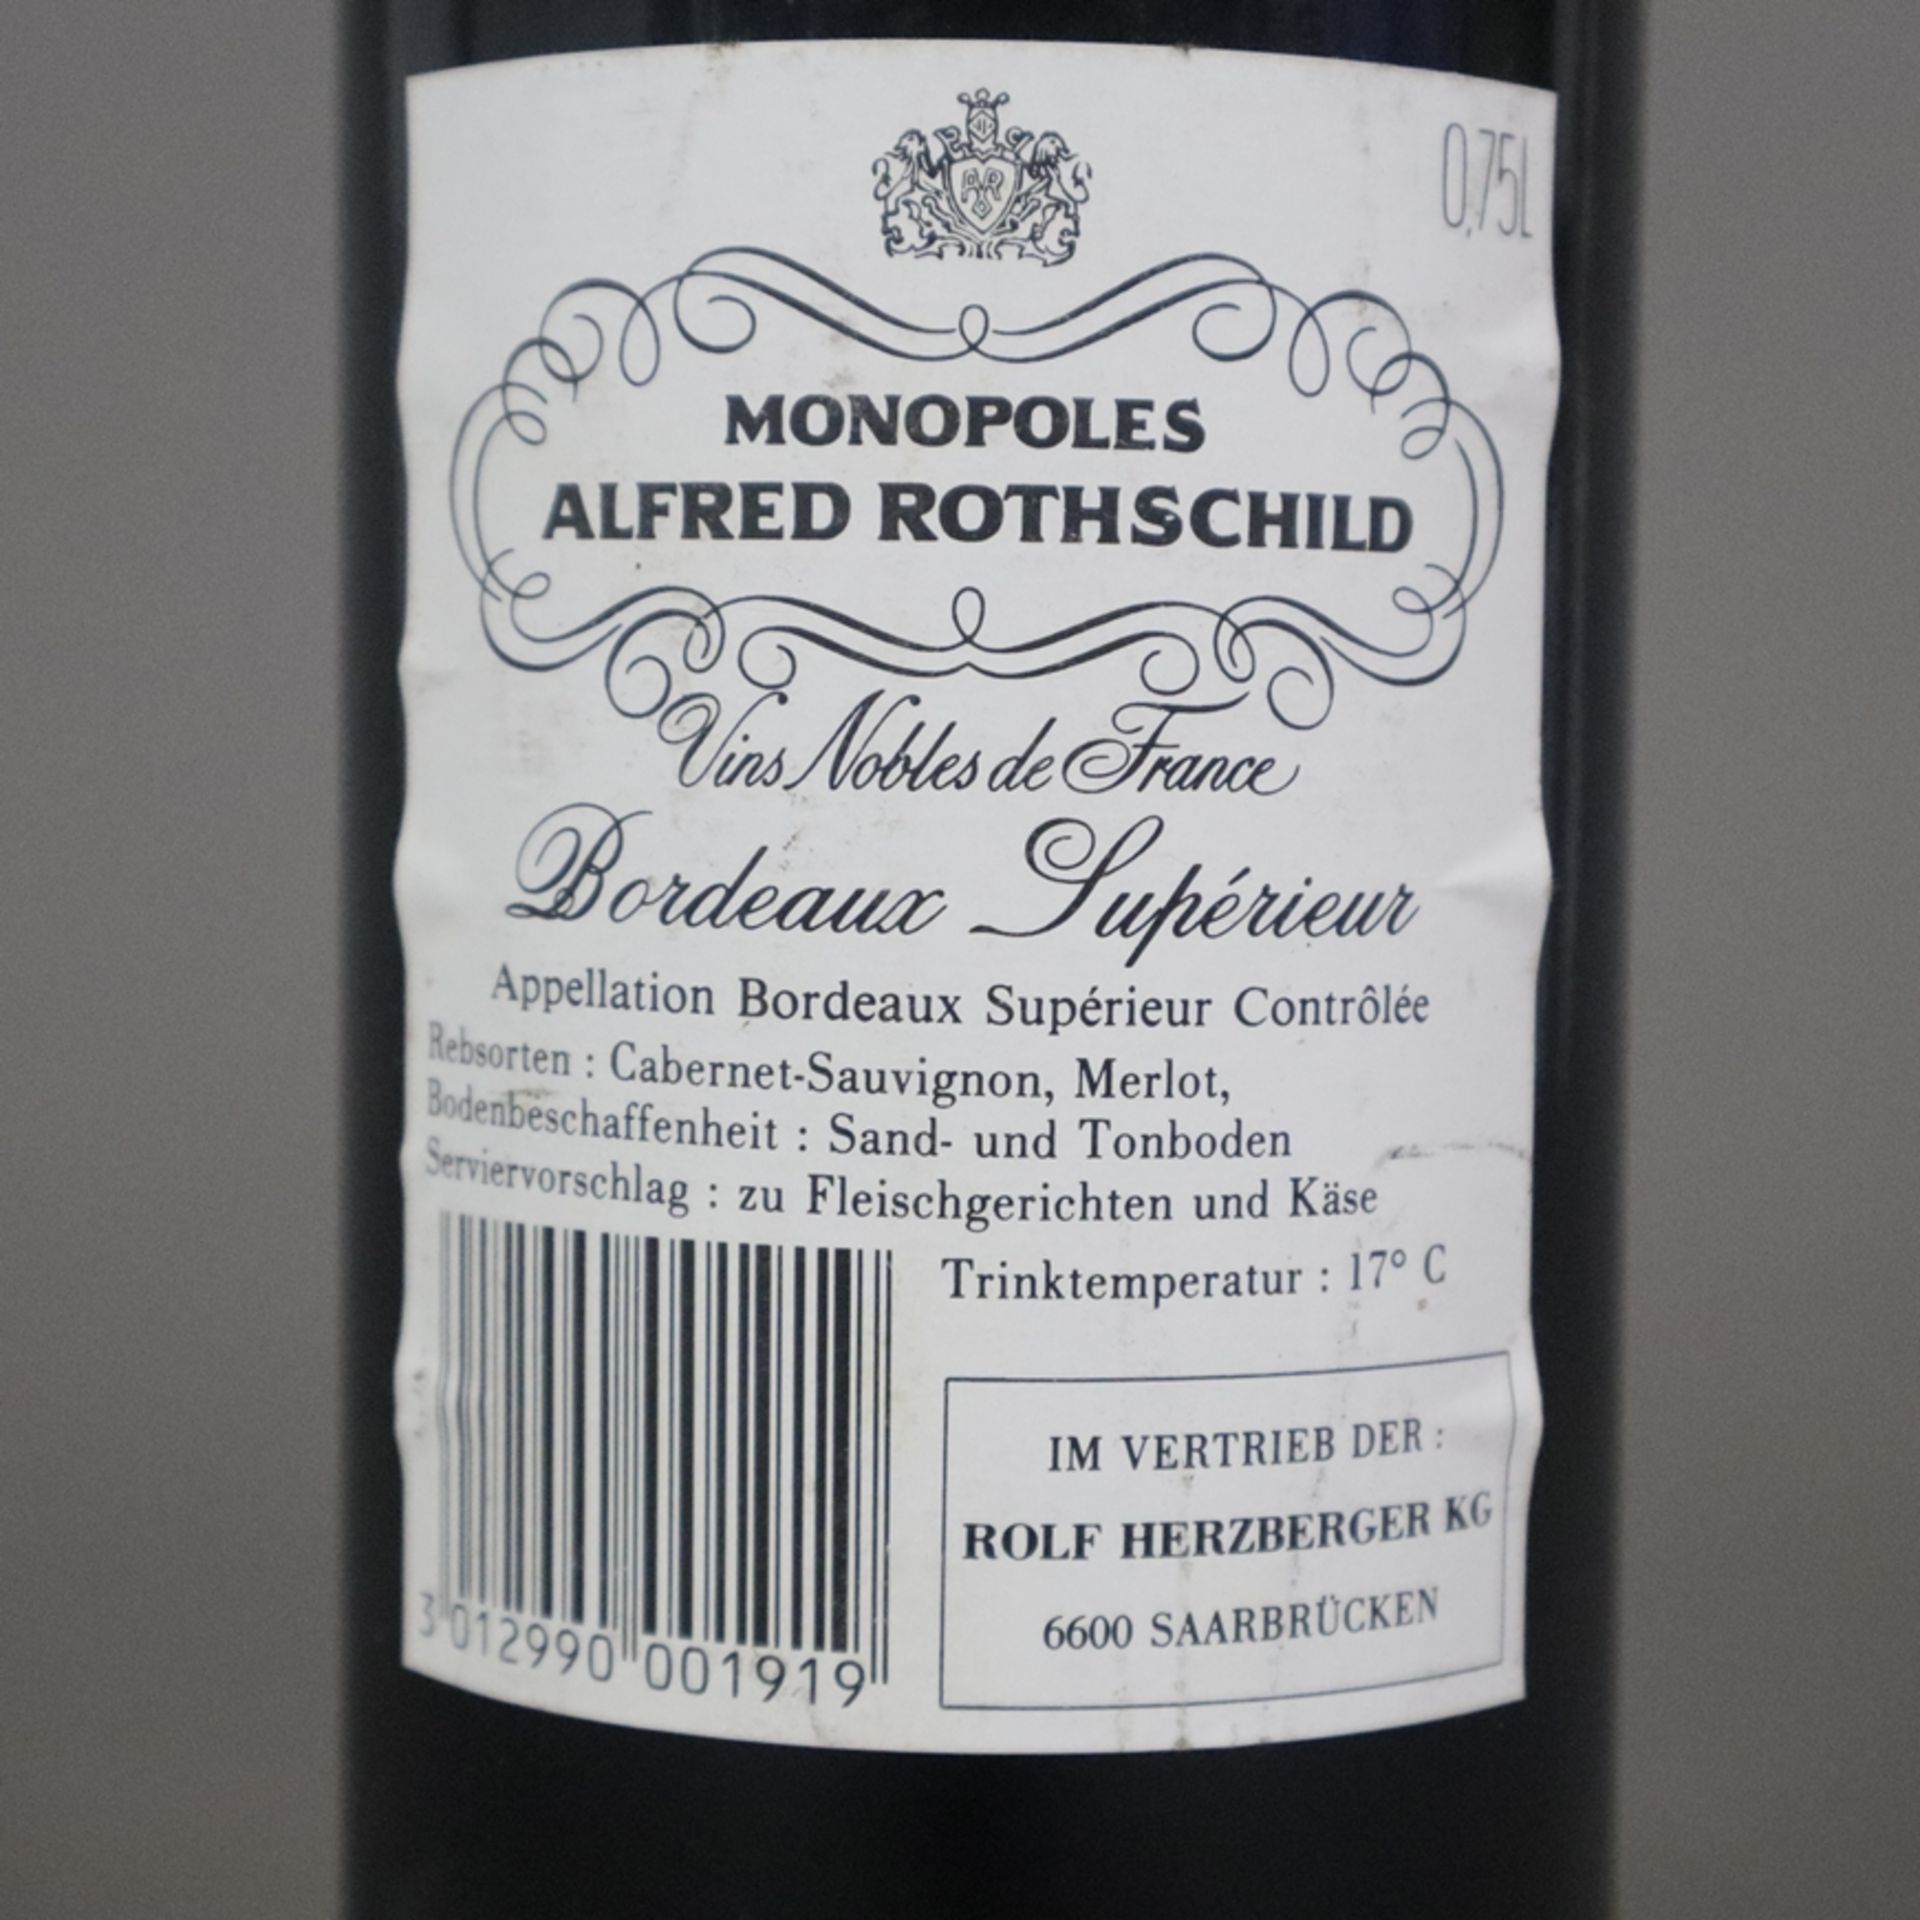 Wein - 1988 Monopoles Alfred Rothschild, Bordeaux Supérieur, France, Füllstand: Top Shoulder, 750 m - Image 5 of 5